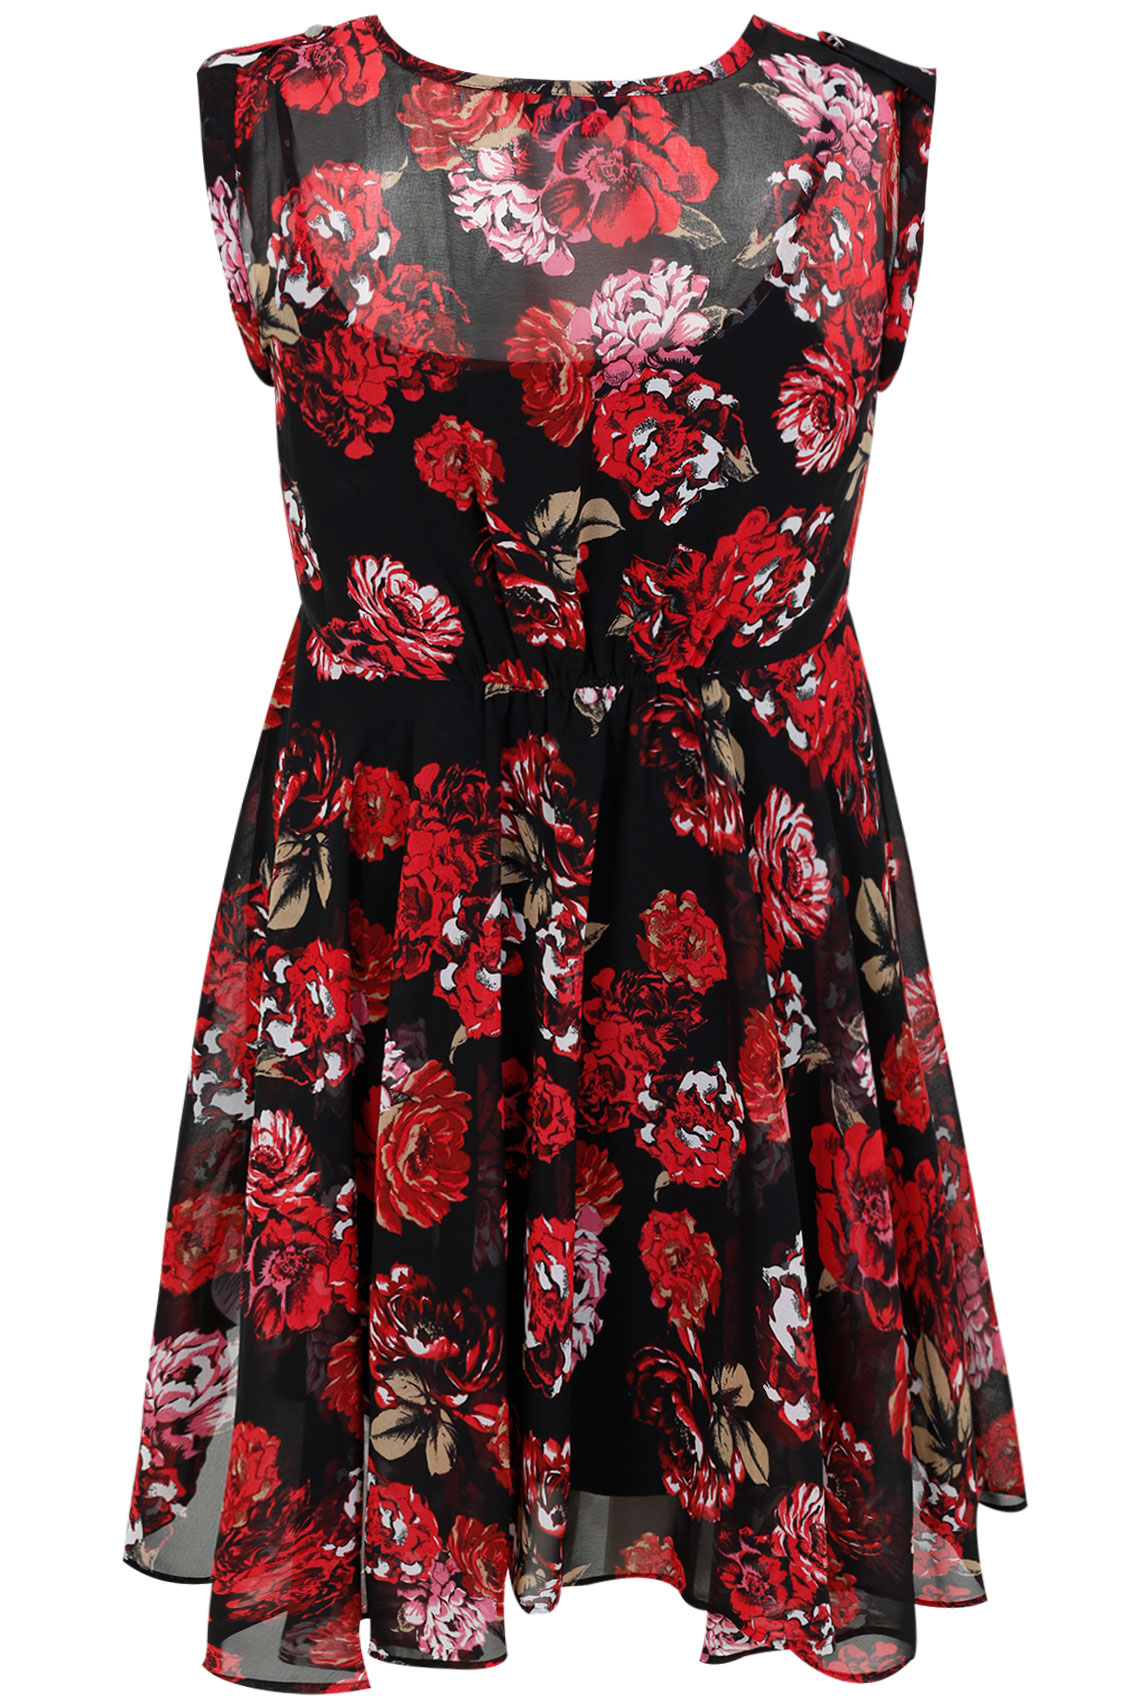 Black & Red Rose Print Chiffon Skater Dress With Hanky Hem Plus Size 14 ...